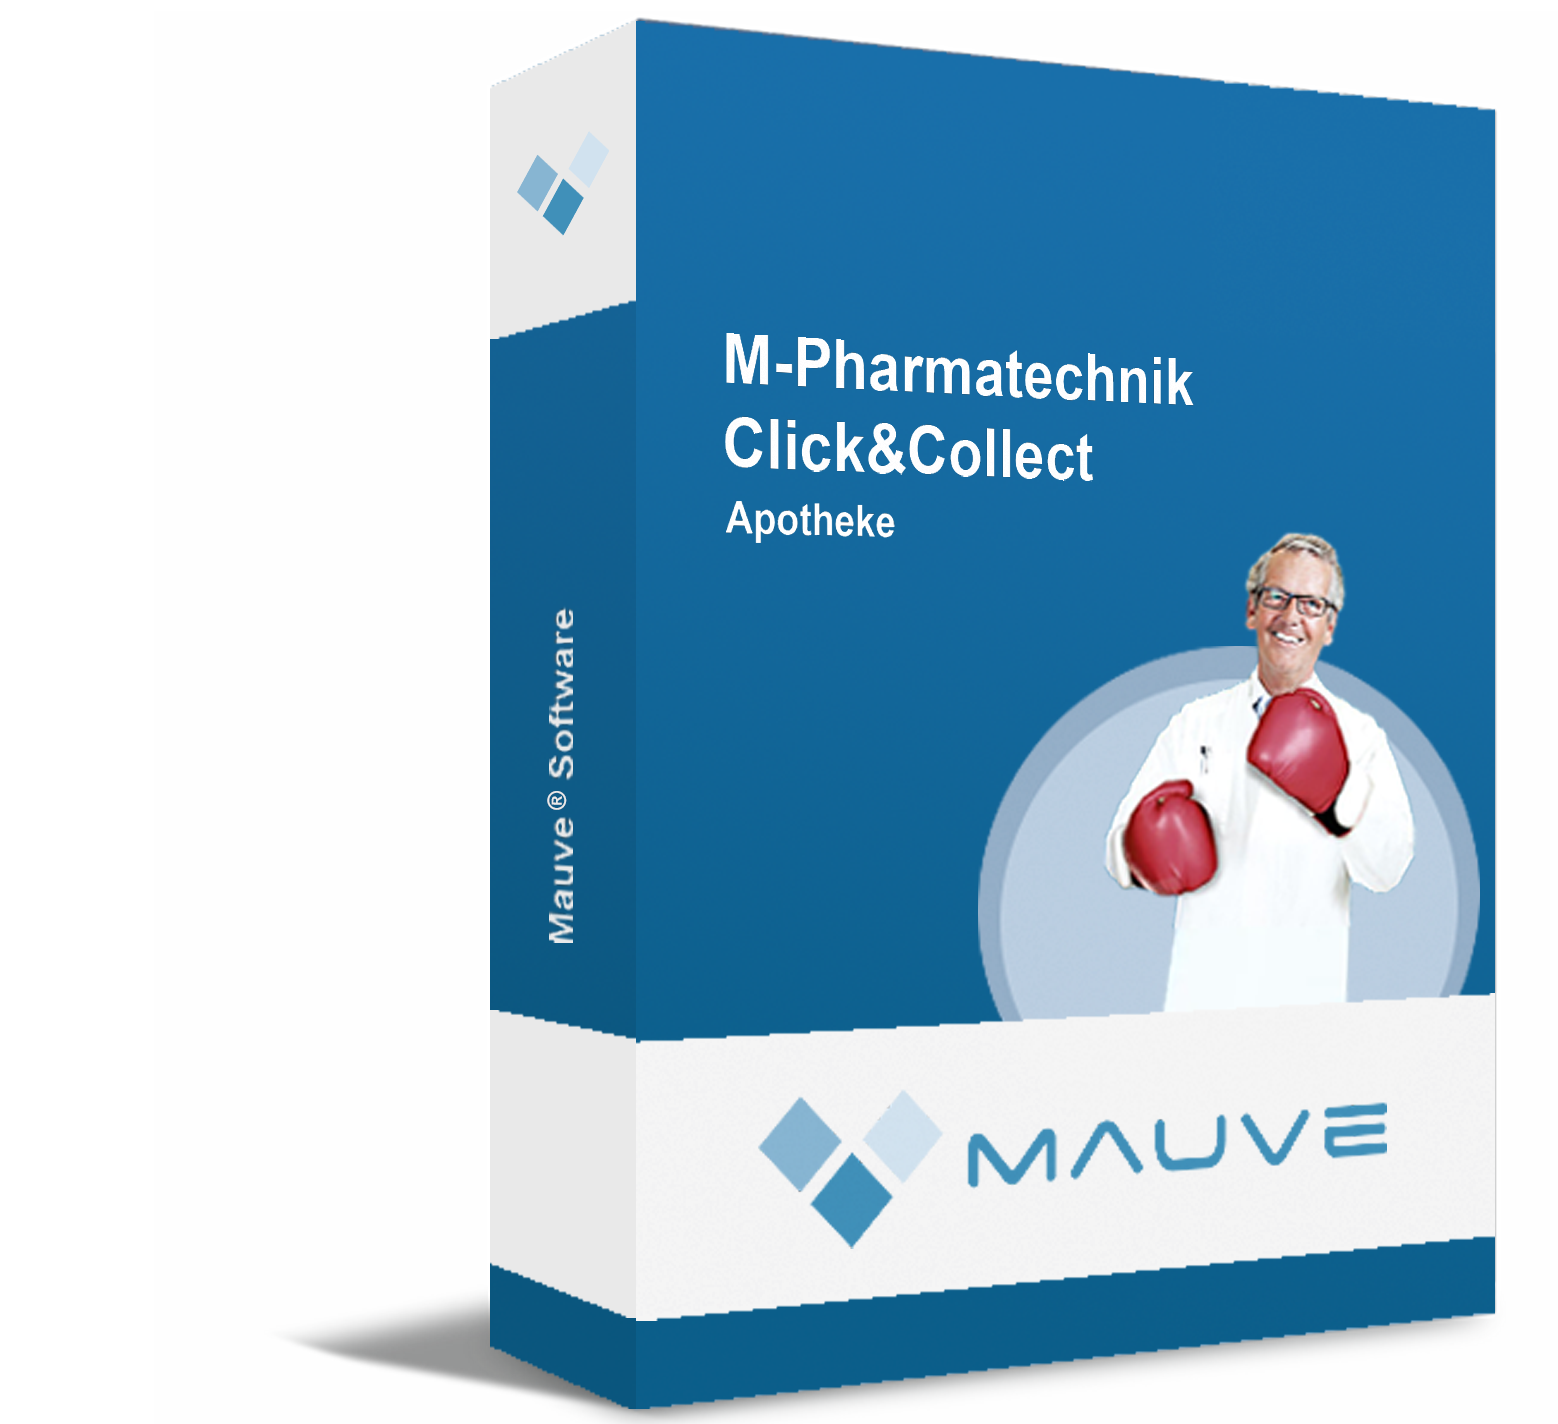 M-Pharmatechnik Click&Collect